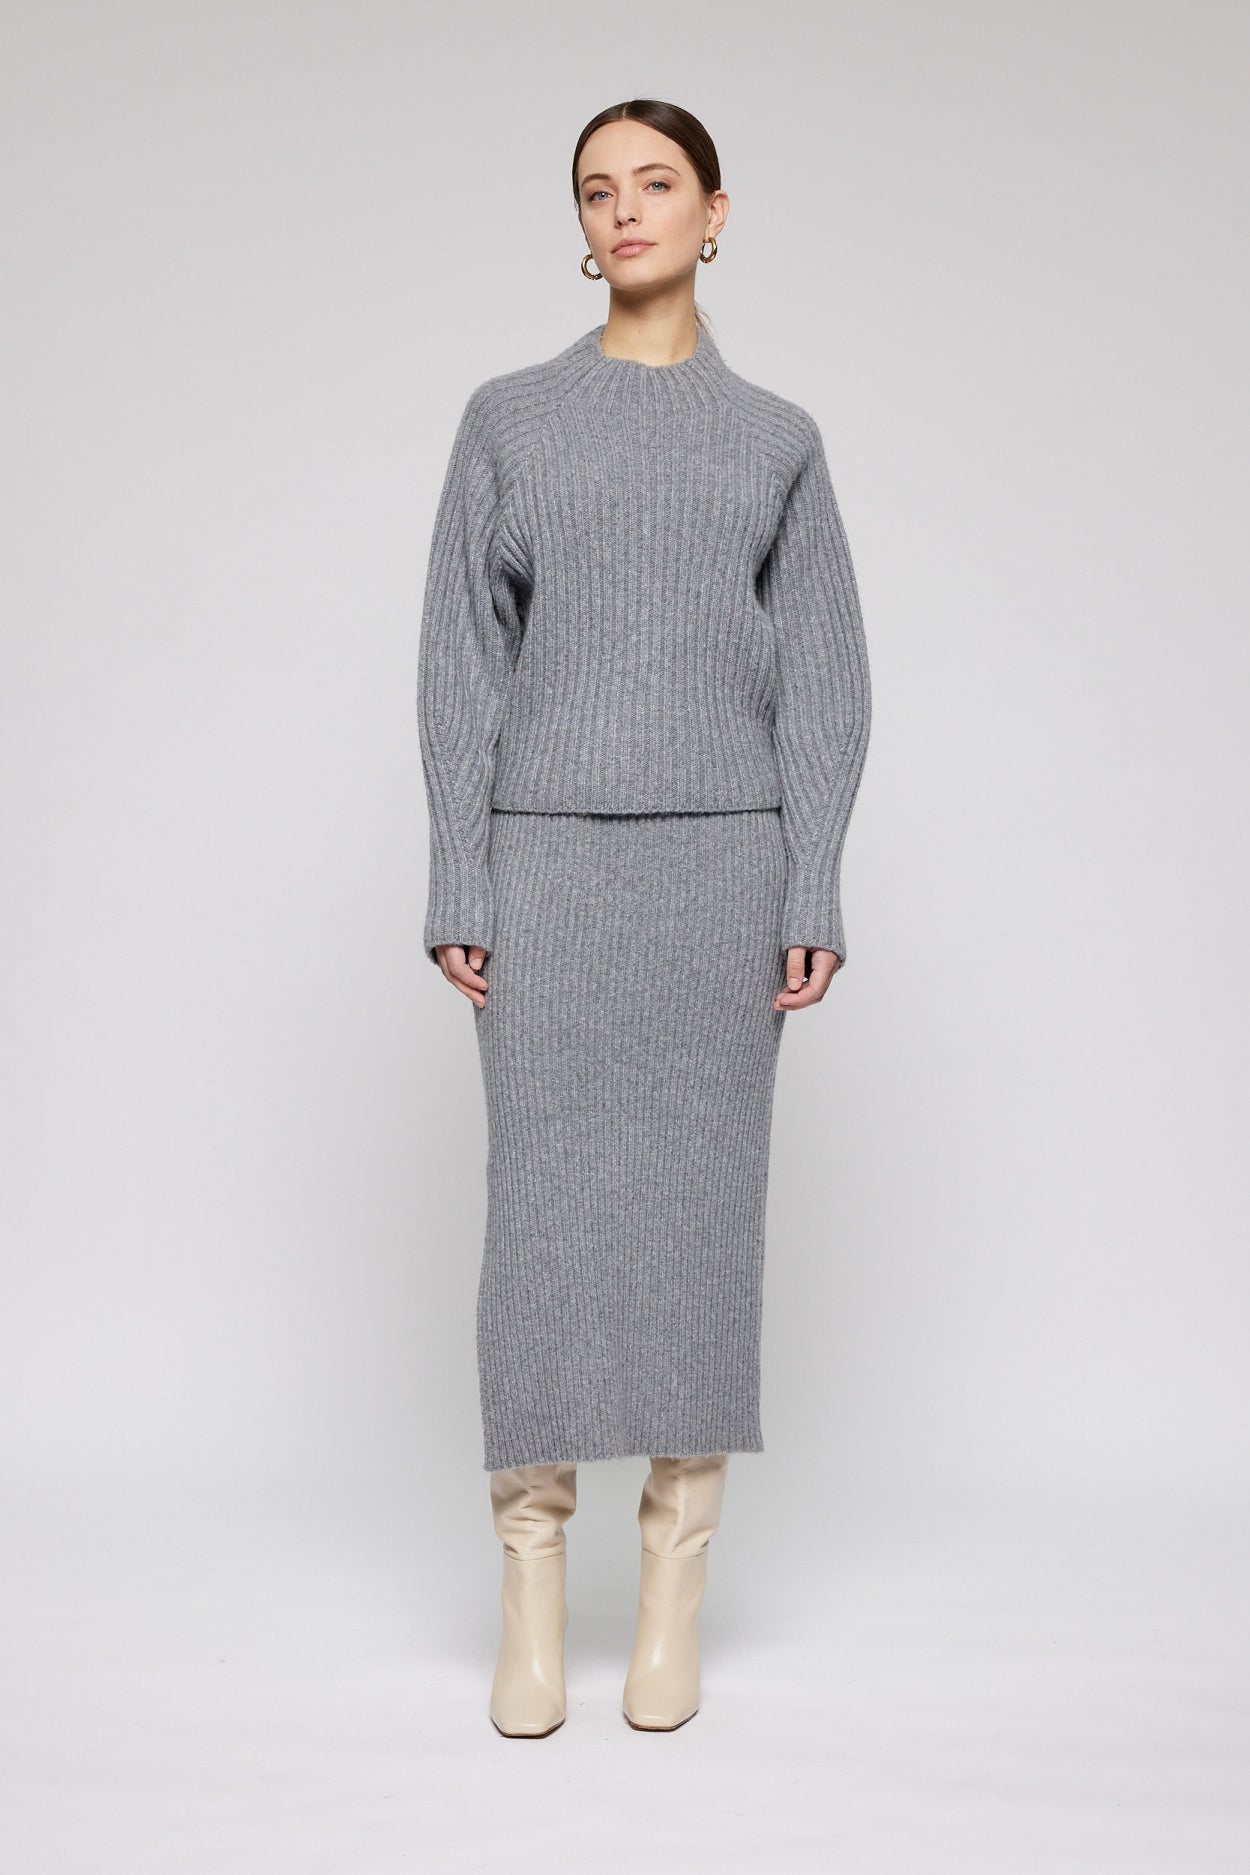 KURE knitted skirt | LIGHT GREY